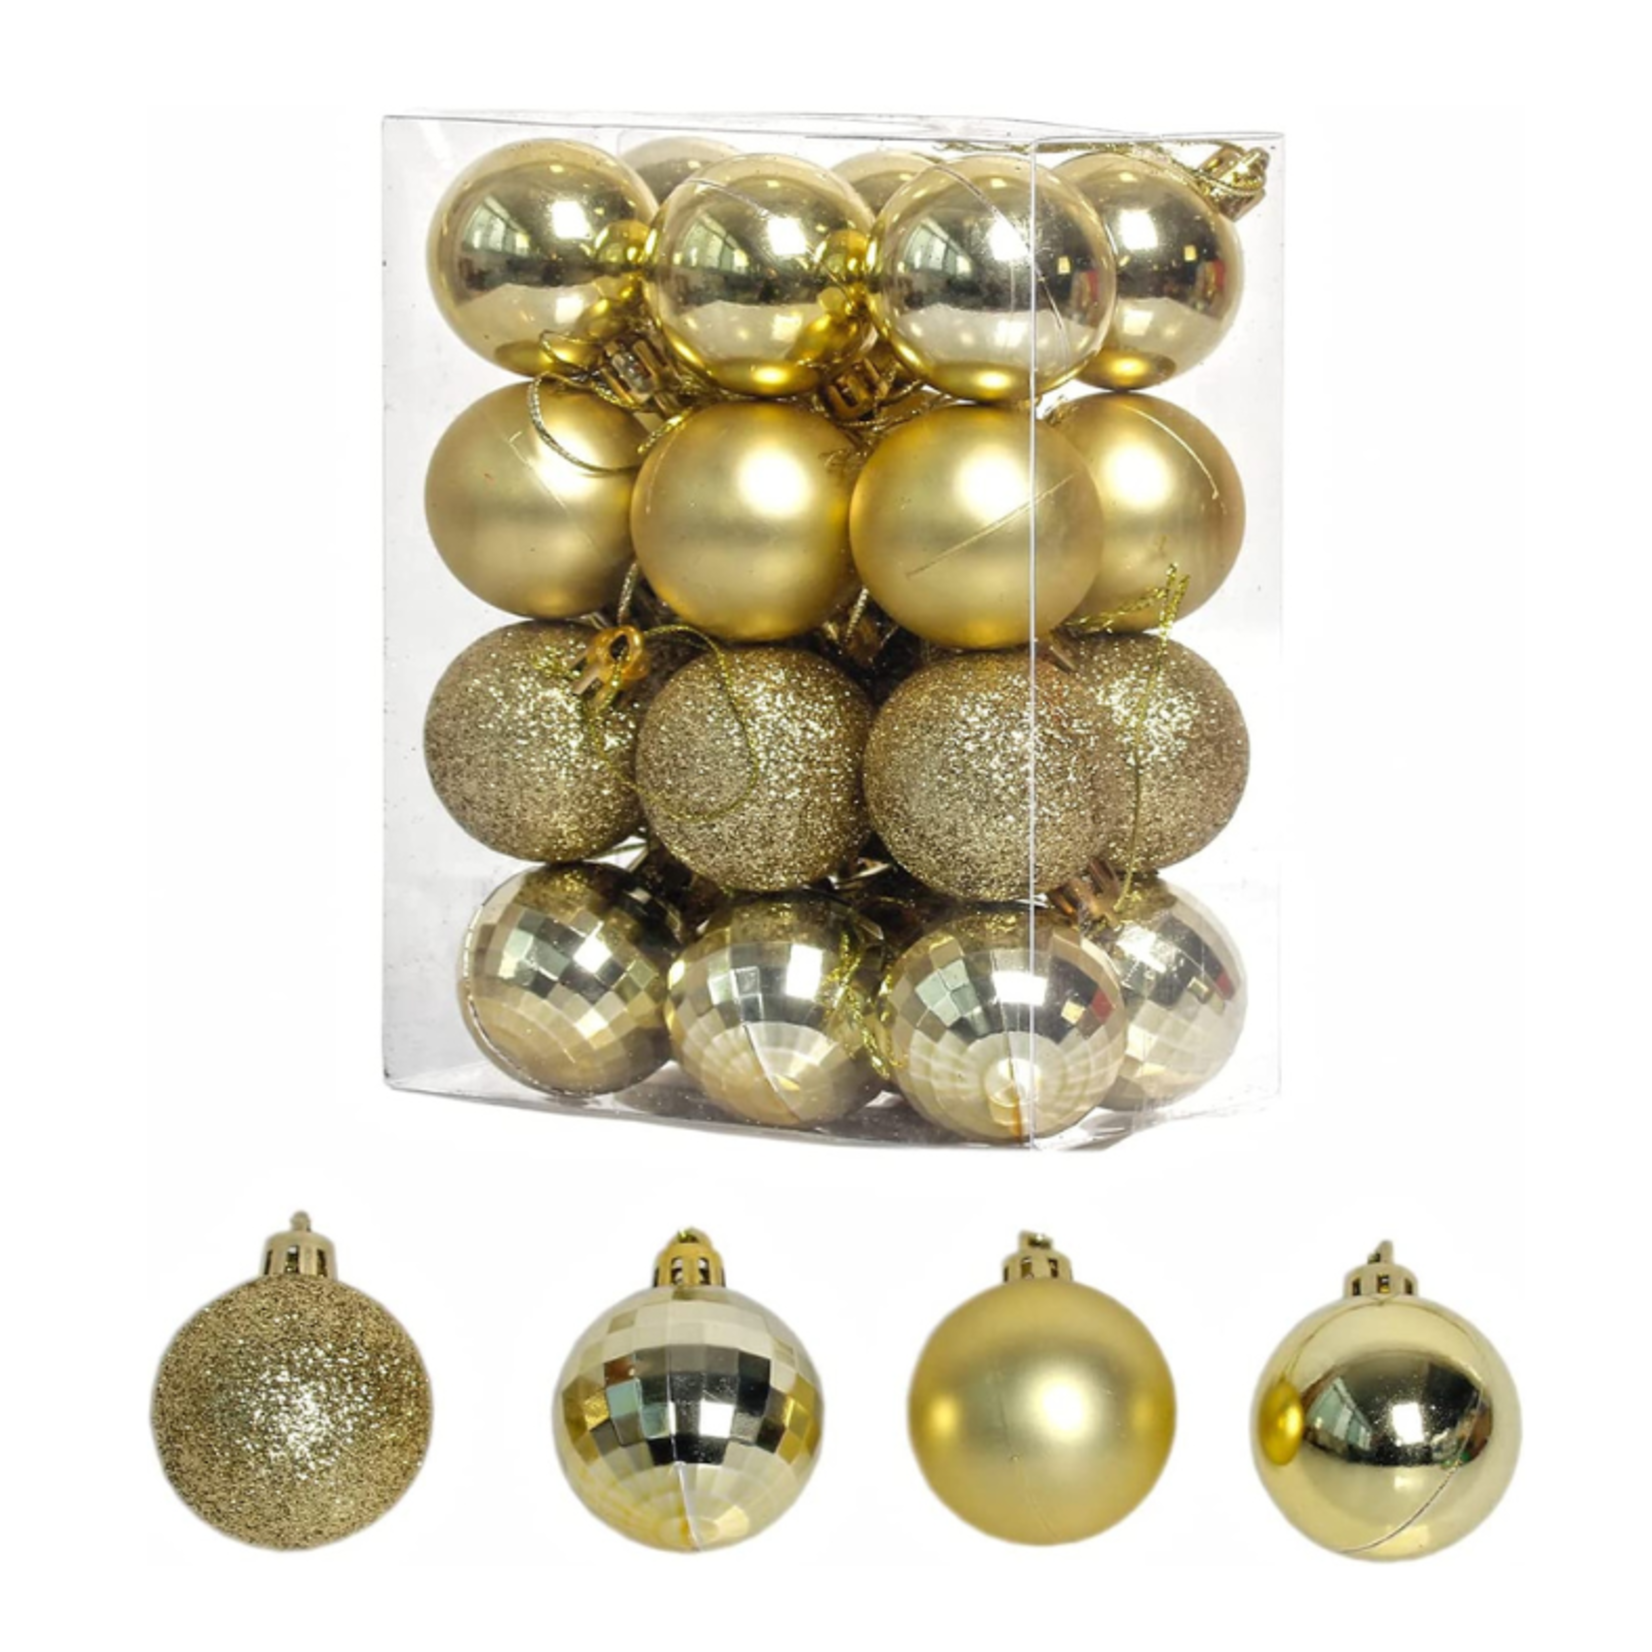 Kbohzbl Christmas Ornament Set 24 Pcs. - Gold